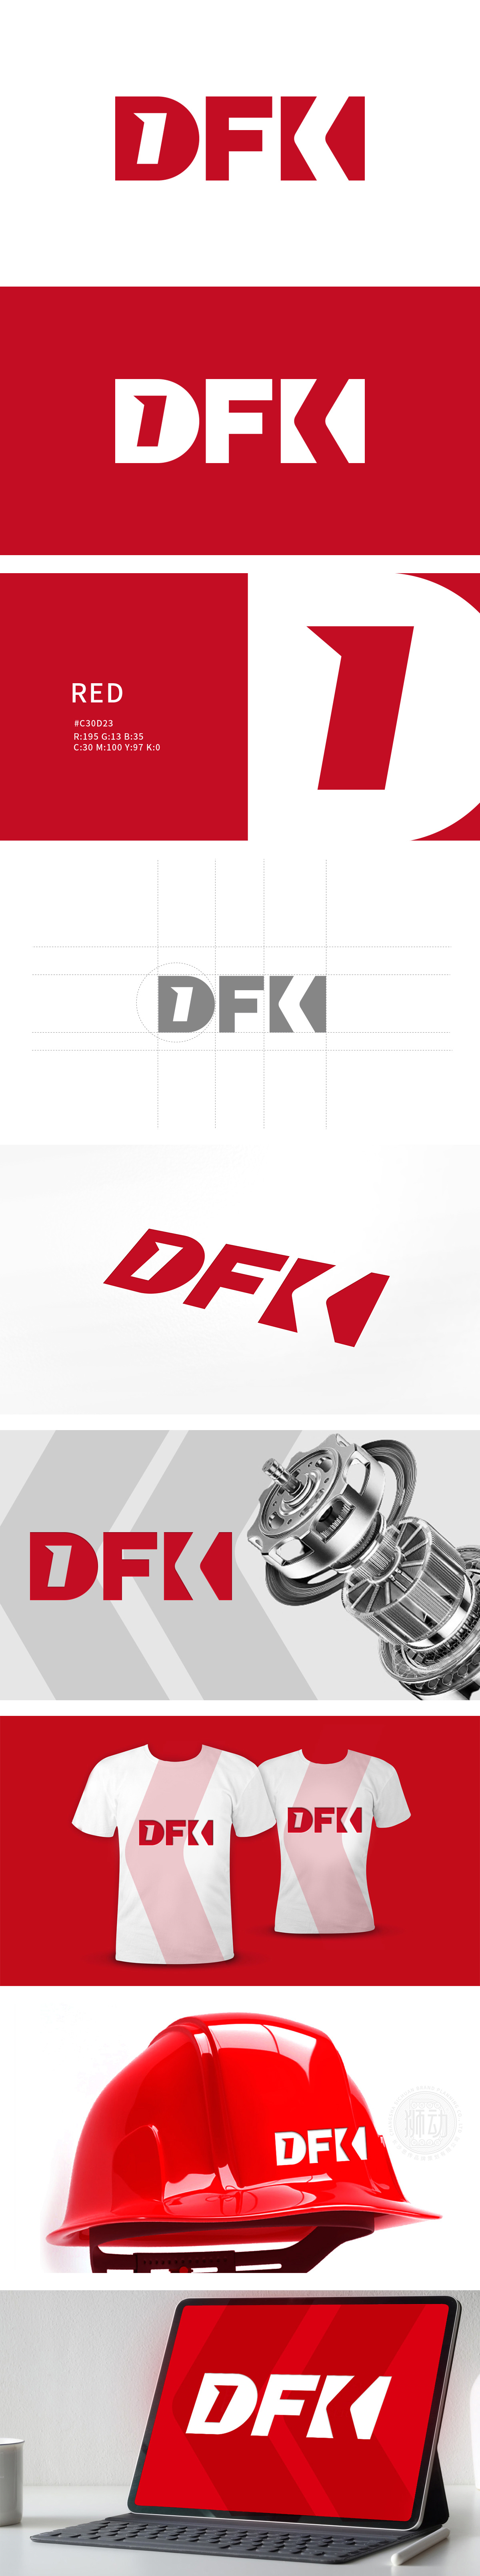 DFK	重工机械	LOGO设计